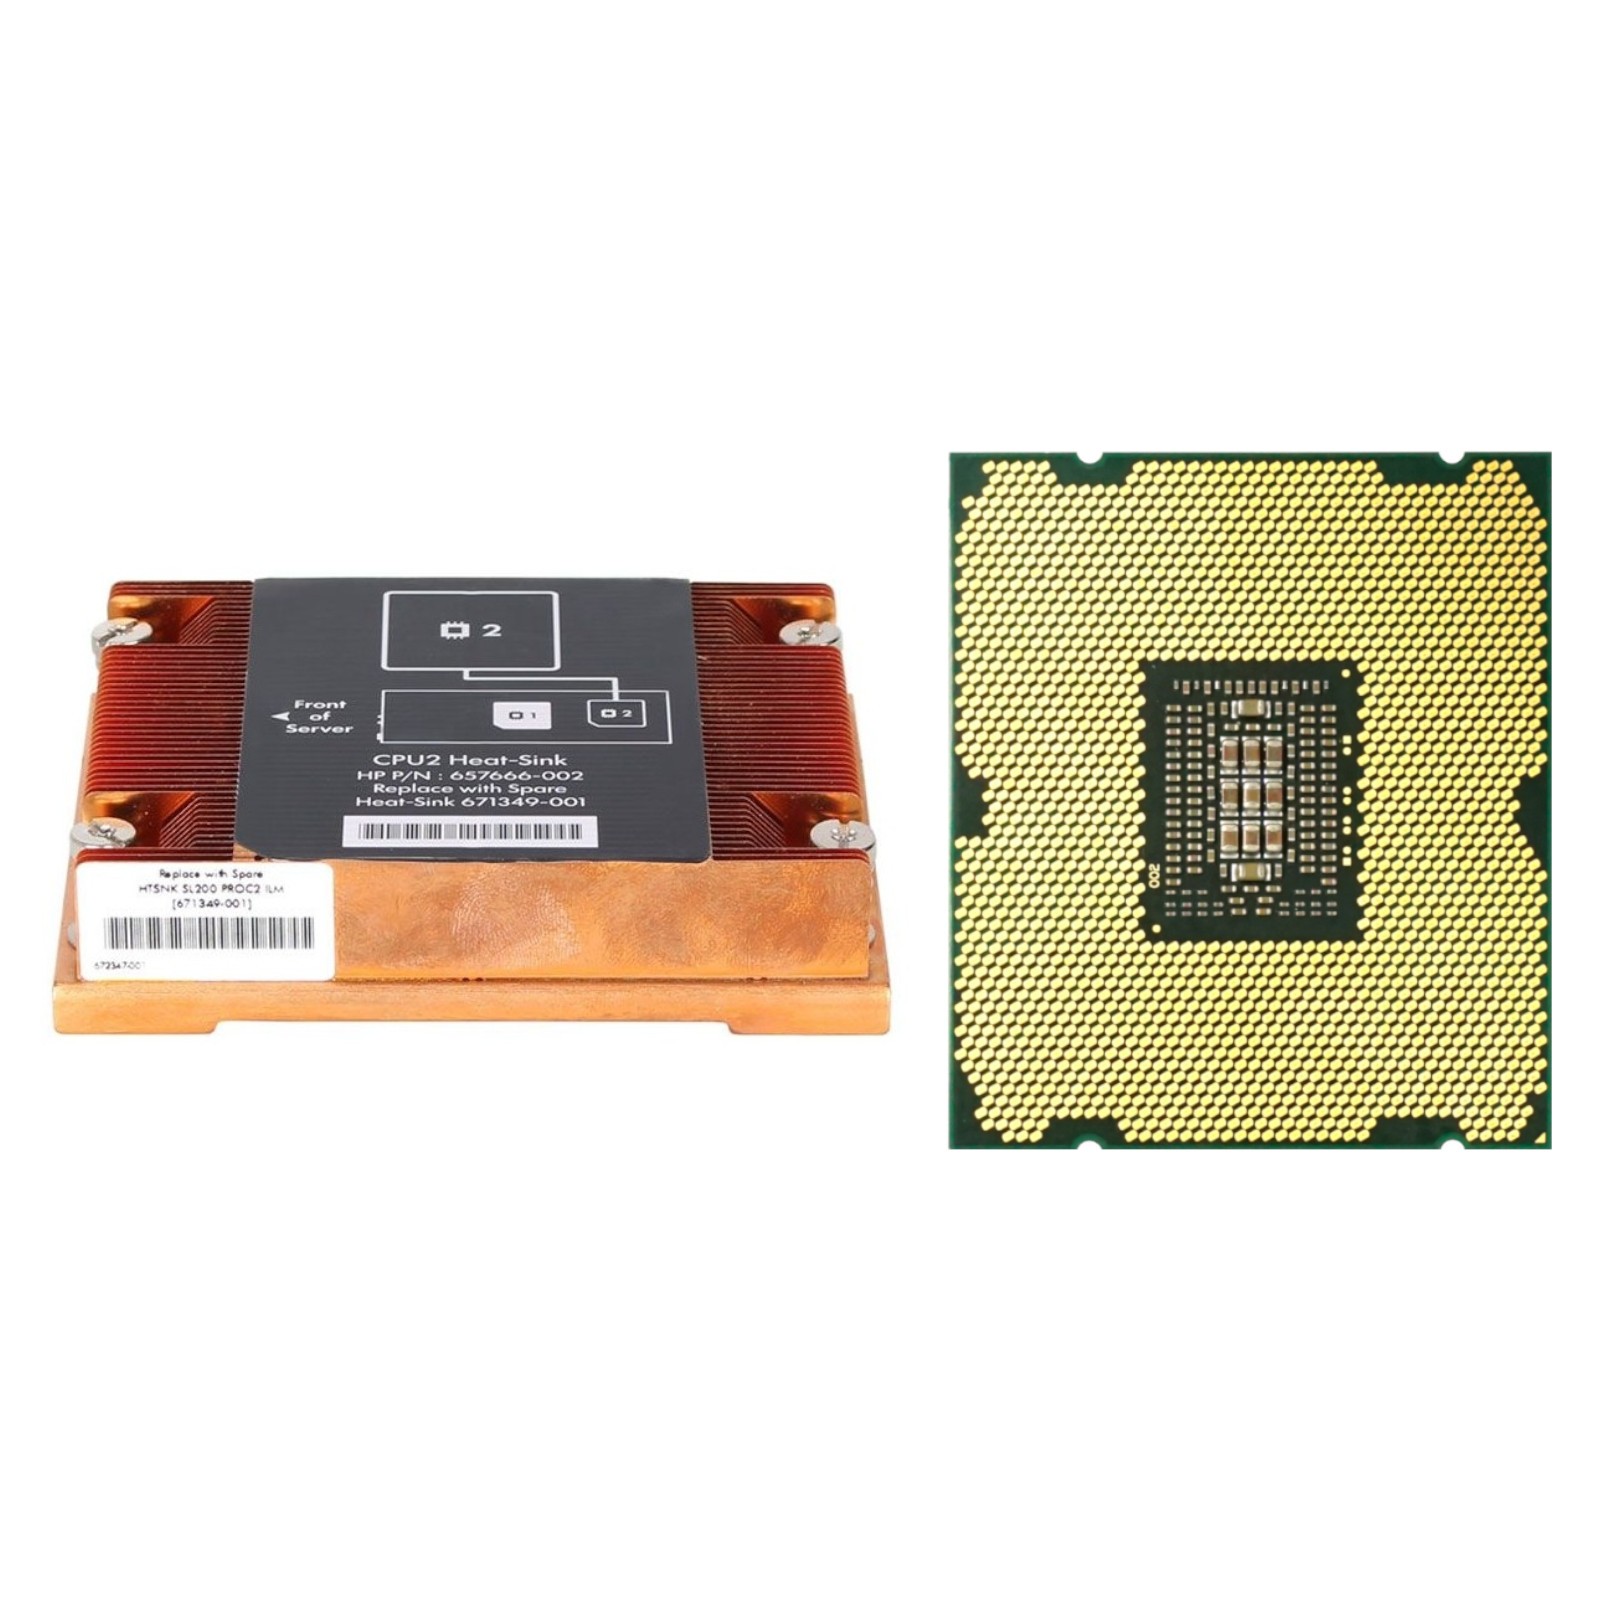 HP (654412-B21) ProLiant SL230S G8 - Intel Xeon E5-2660 CPU2 Kit